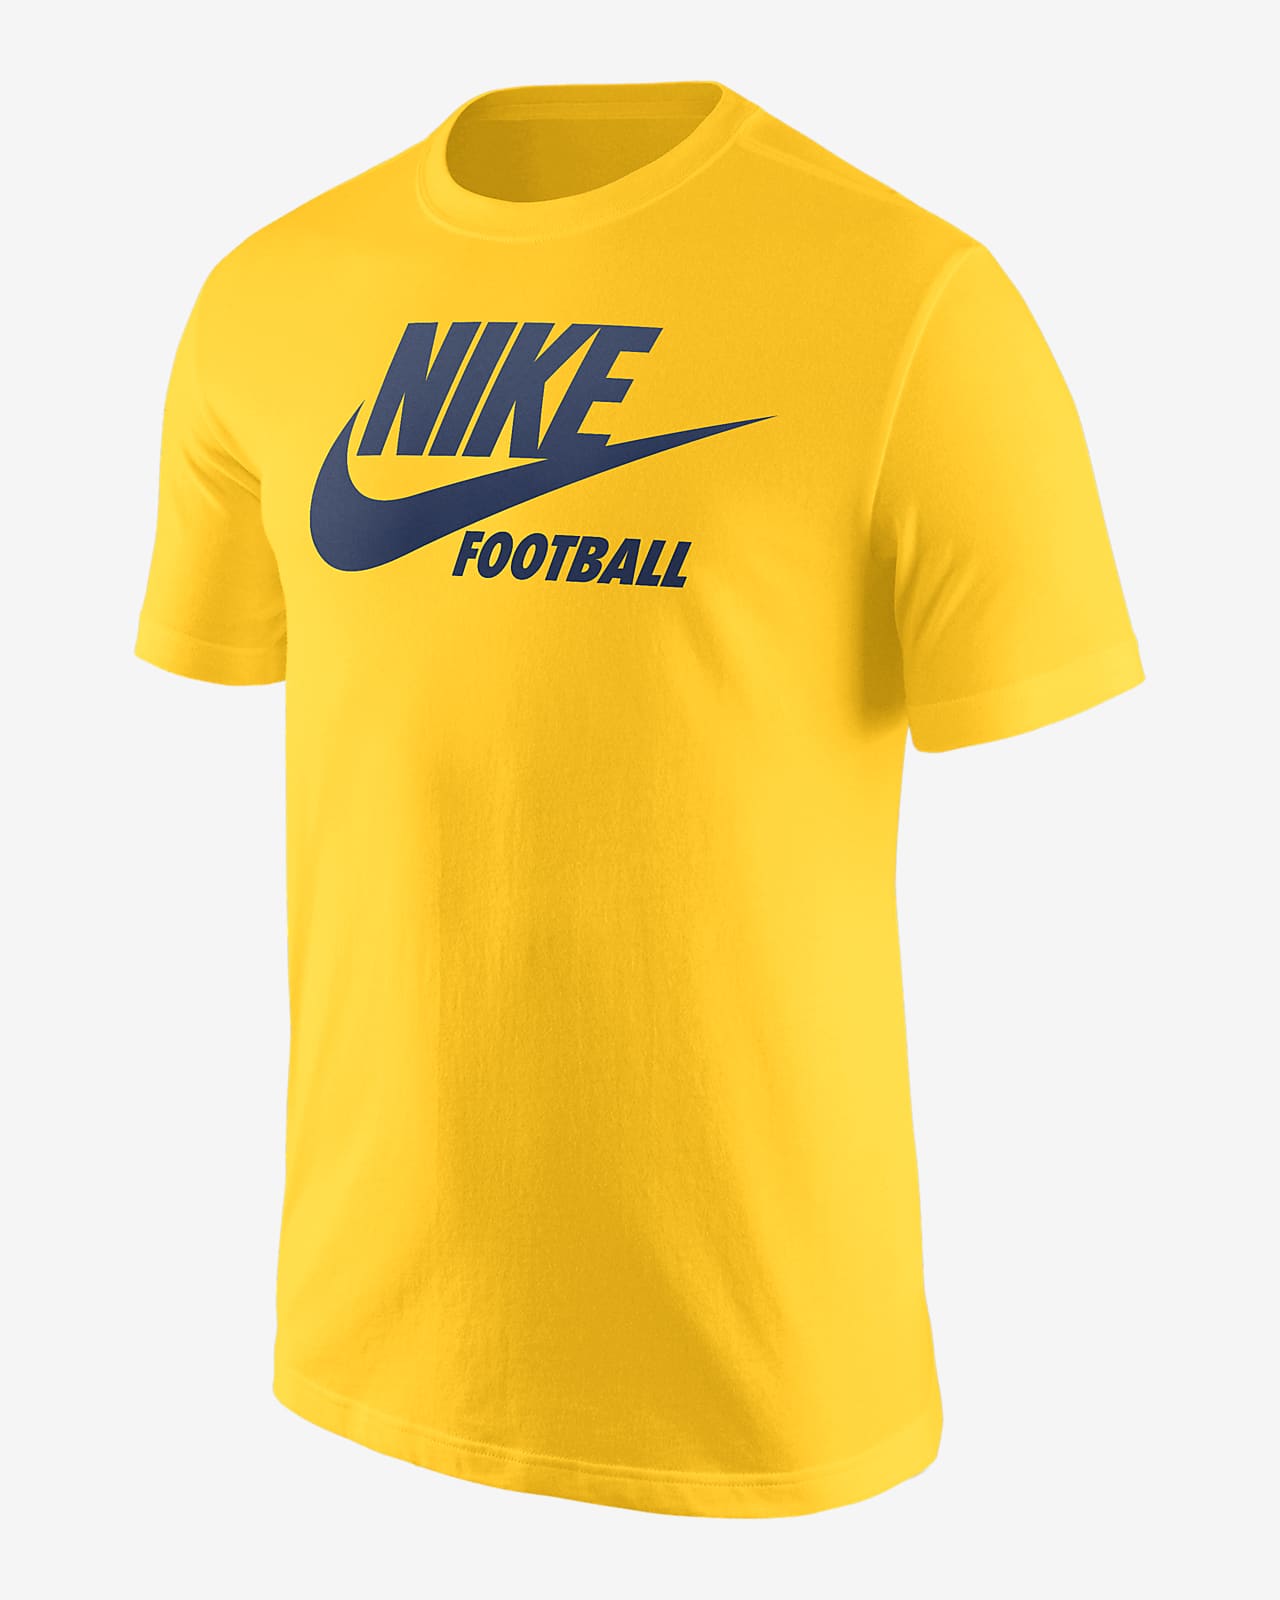 Nike Football Men's T-Shirt